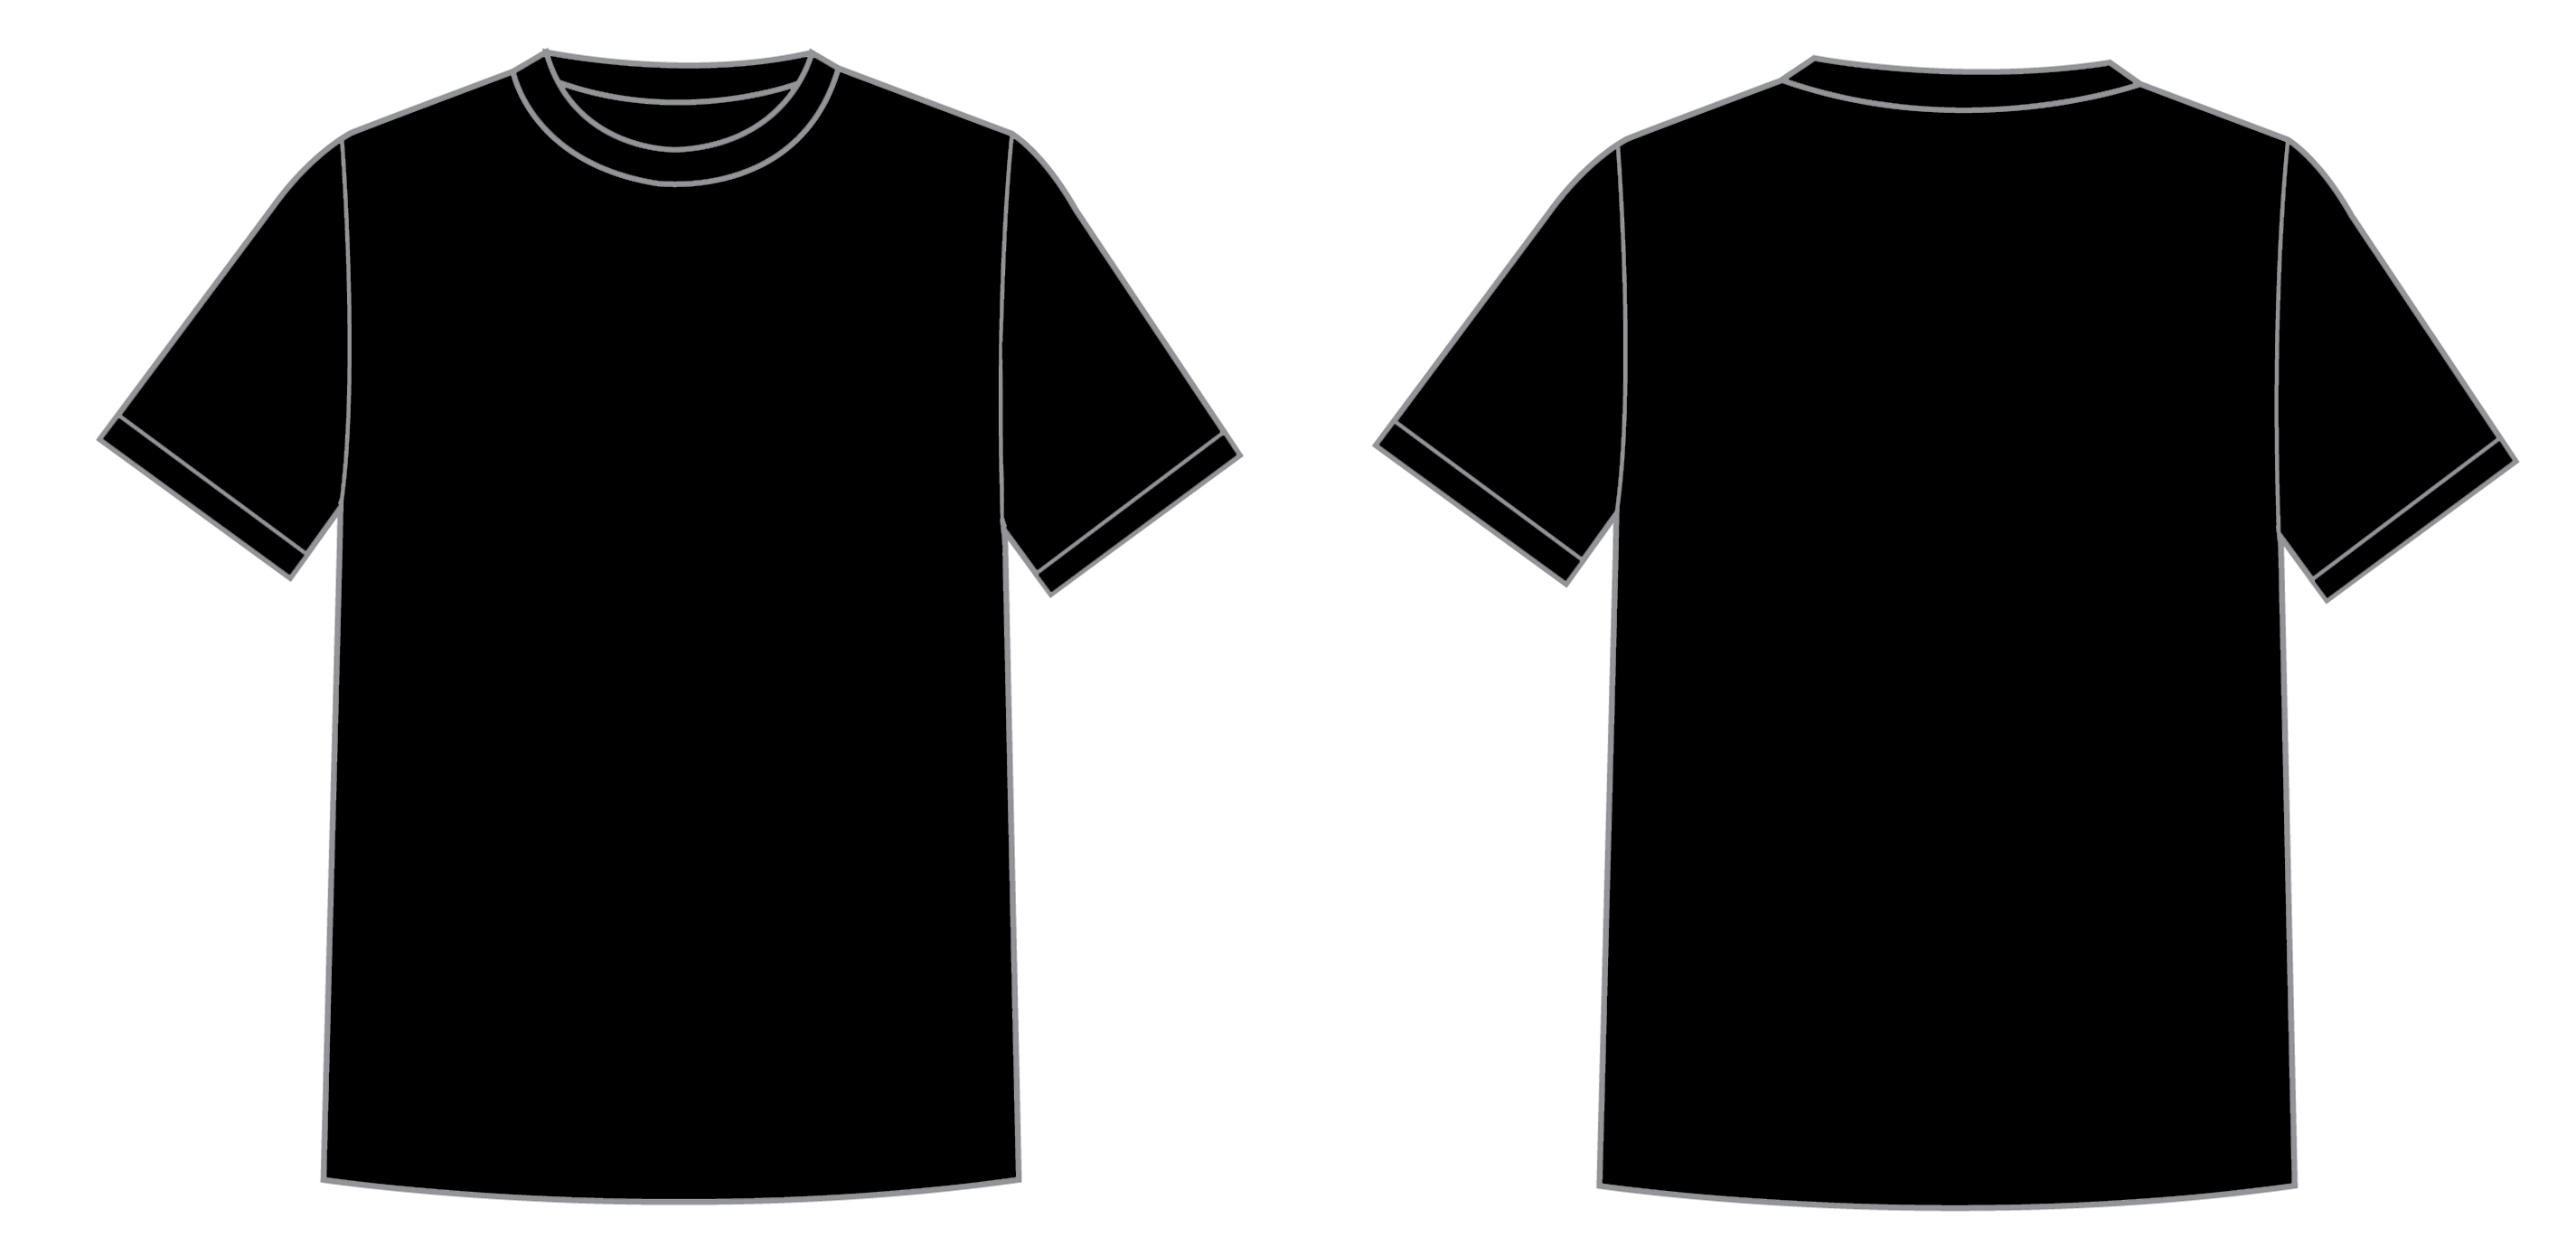 Black T Shirt Template - affordablecarecat